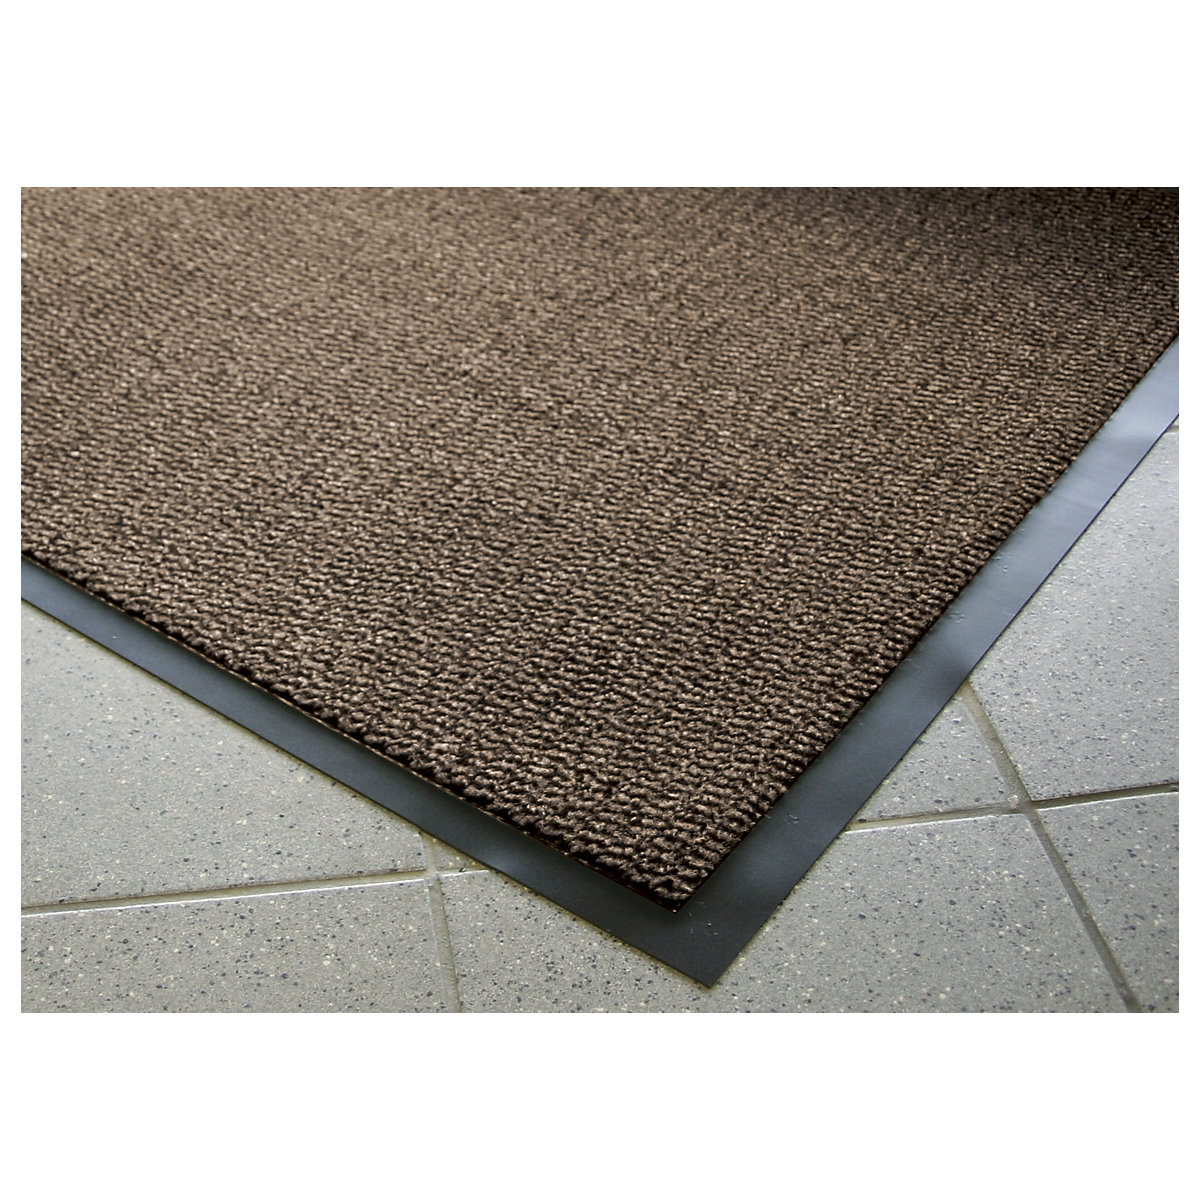 Entrance matting for indoor use, polypropylene pile, LxW 1200 x 900 mm, black / brown